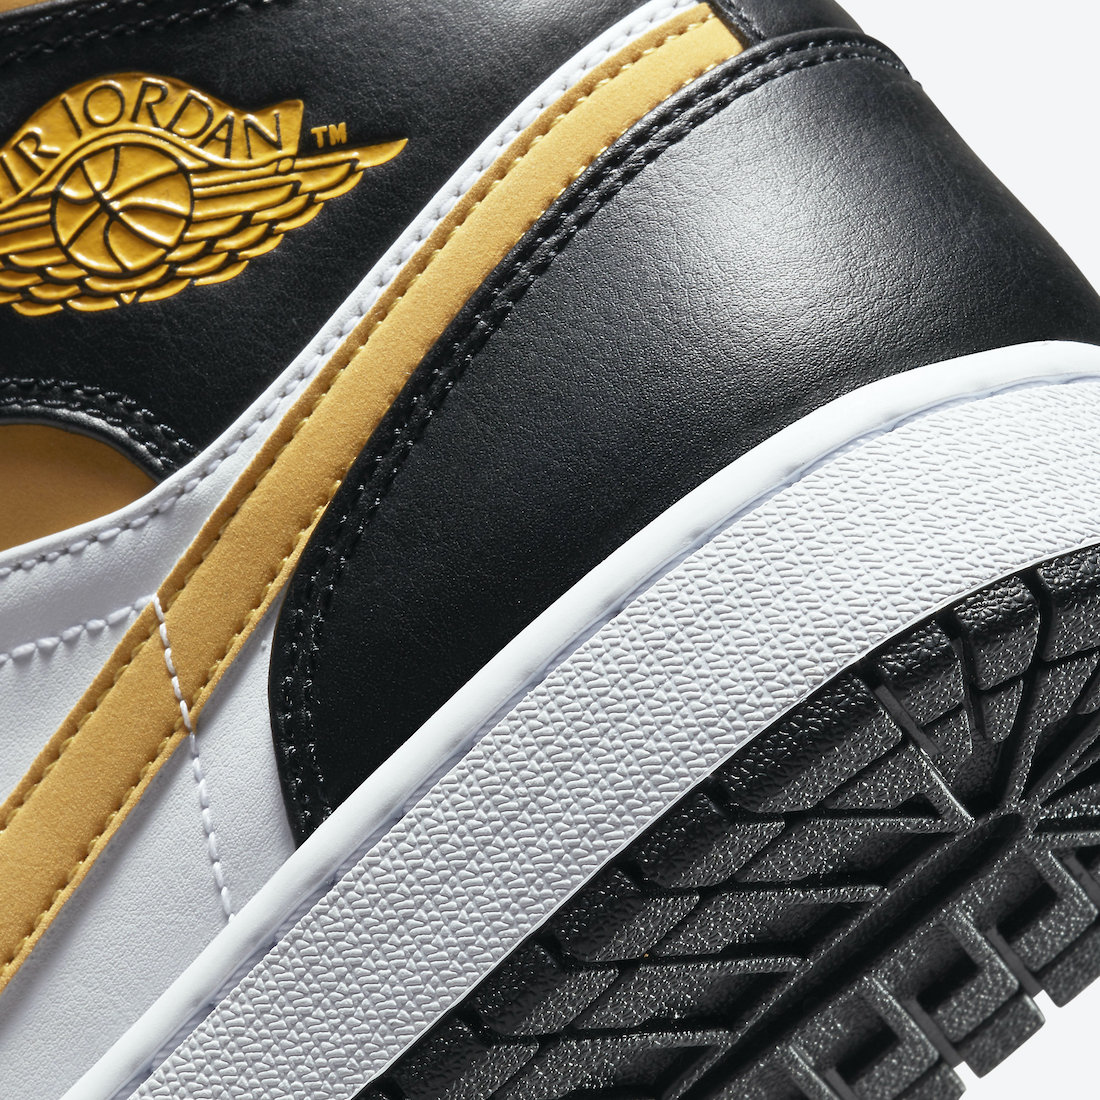 Nike Air Jordan 1 Retro Mid Pollen 4-14 White Black - Release -  HotelomegaShops, 200